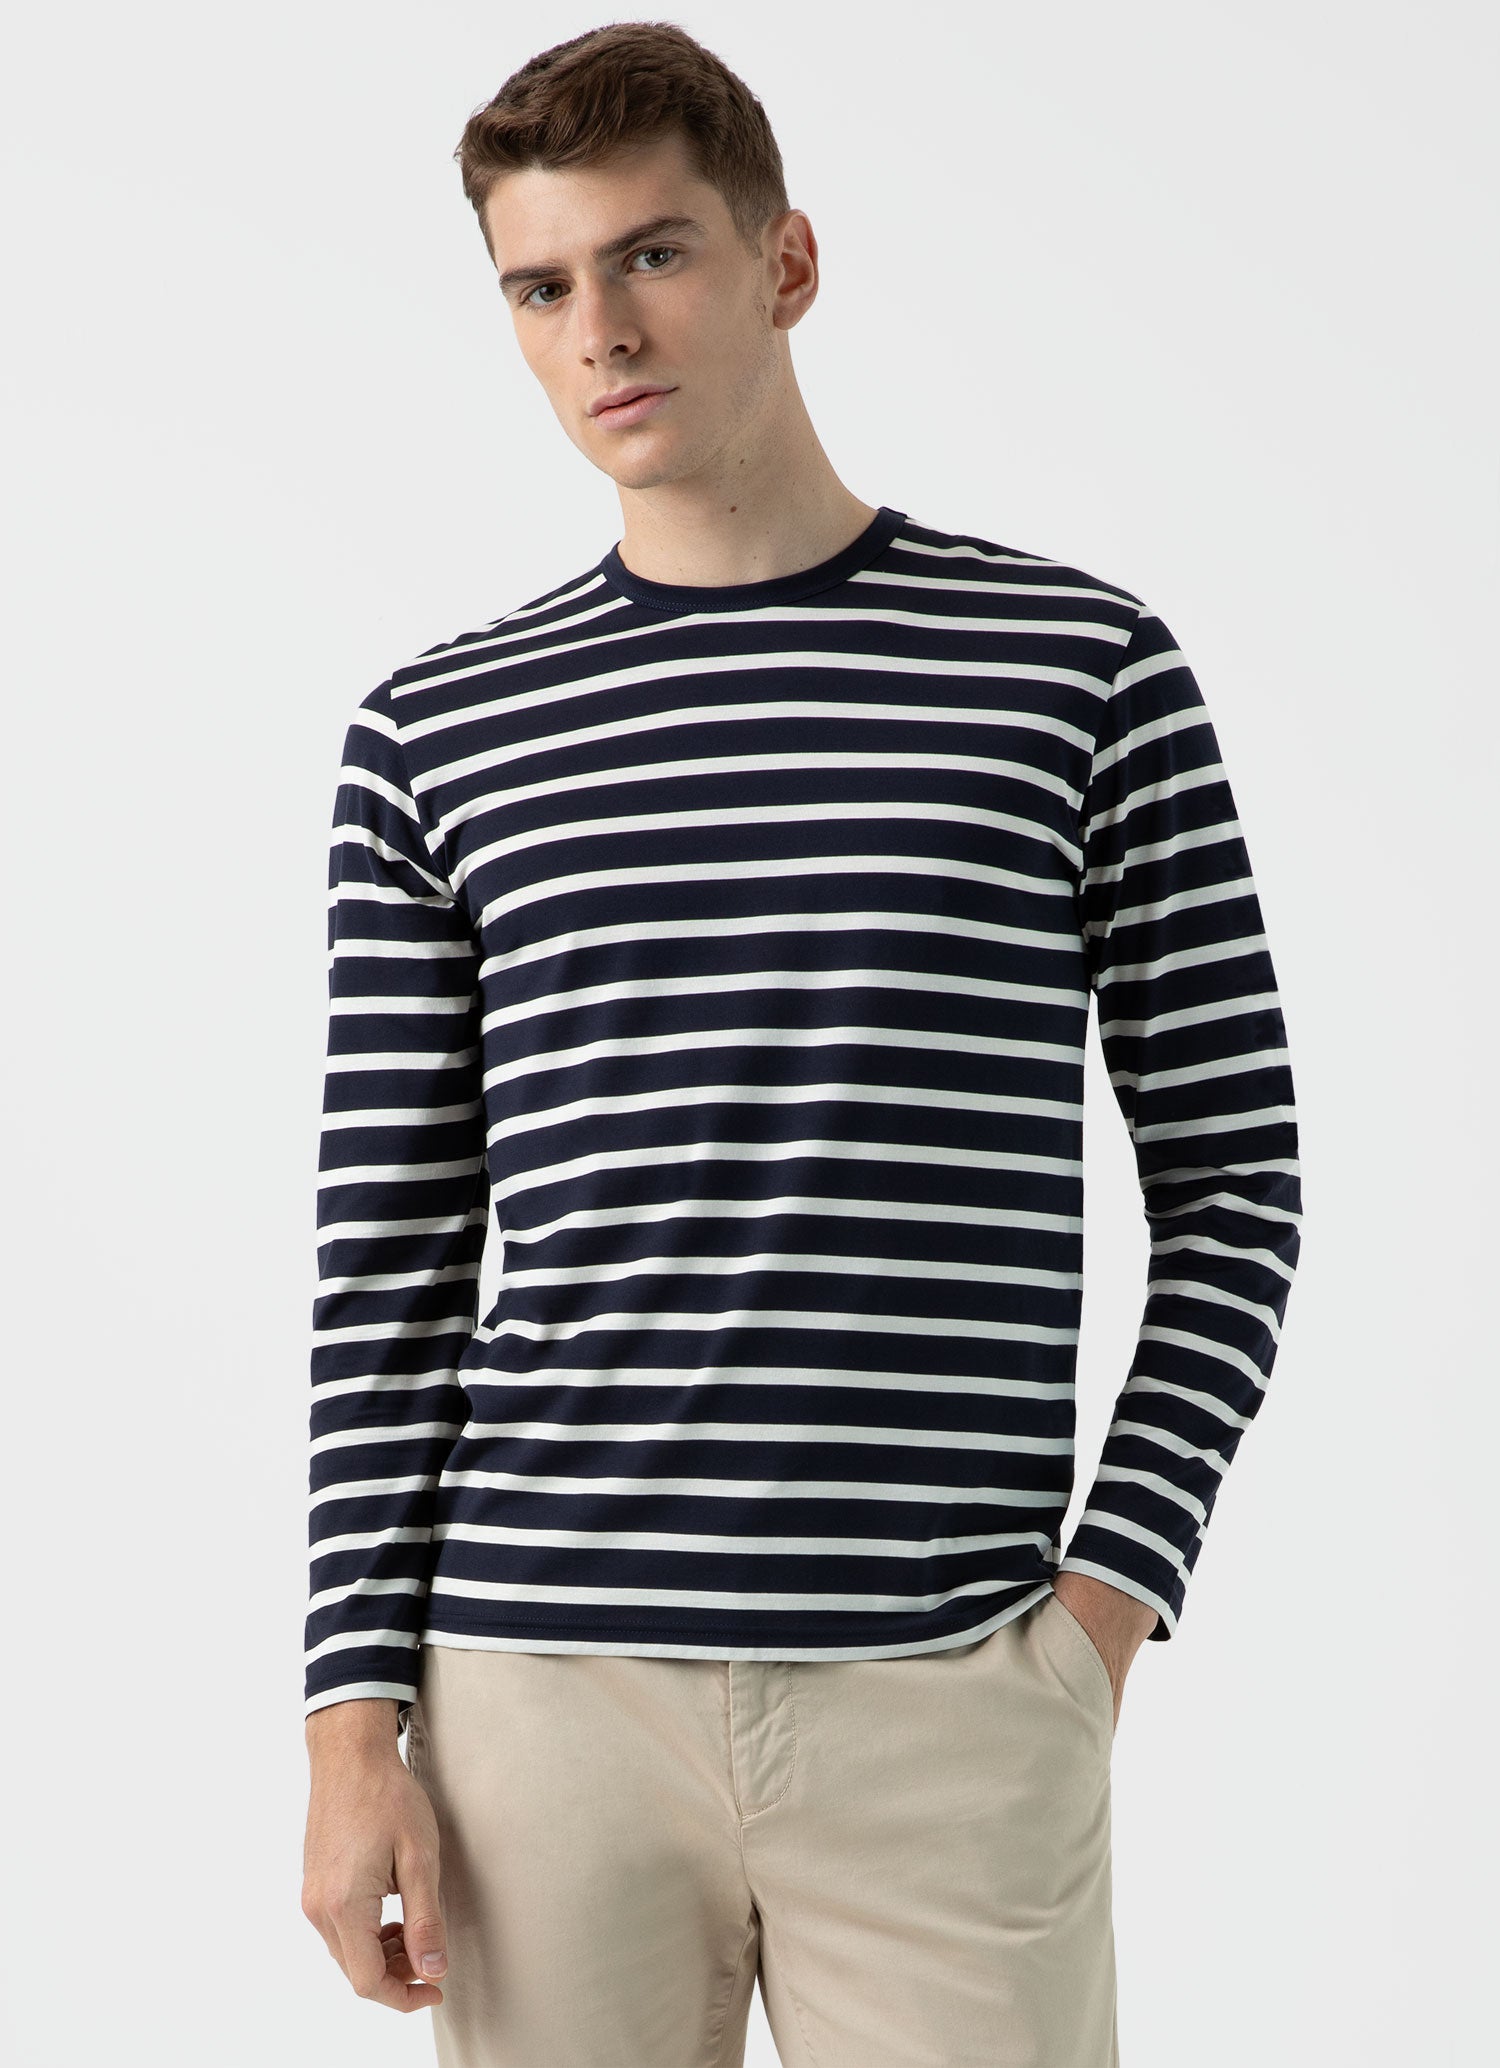 Men's Long Sleeve Classic T-shirt in Navy/Ecru Breton Stripe